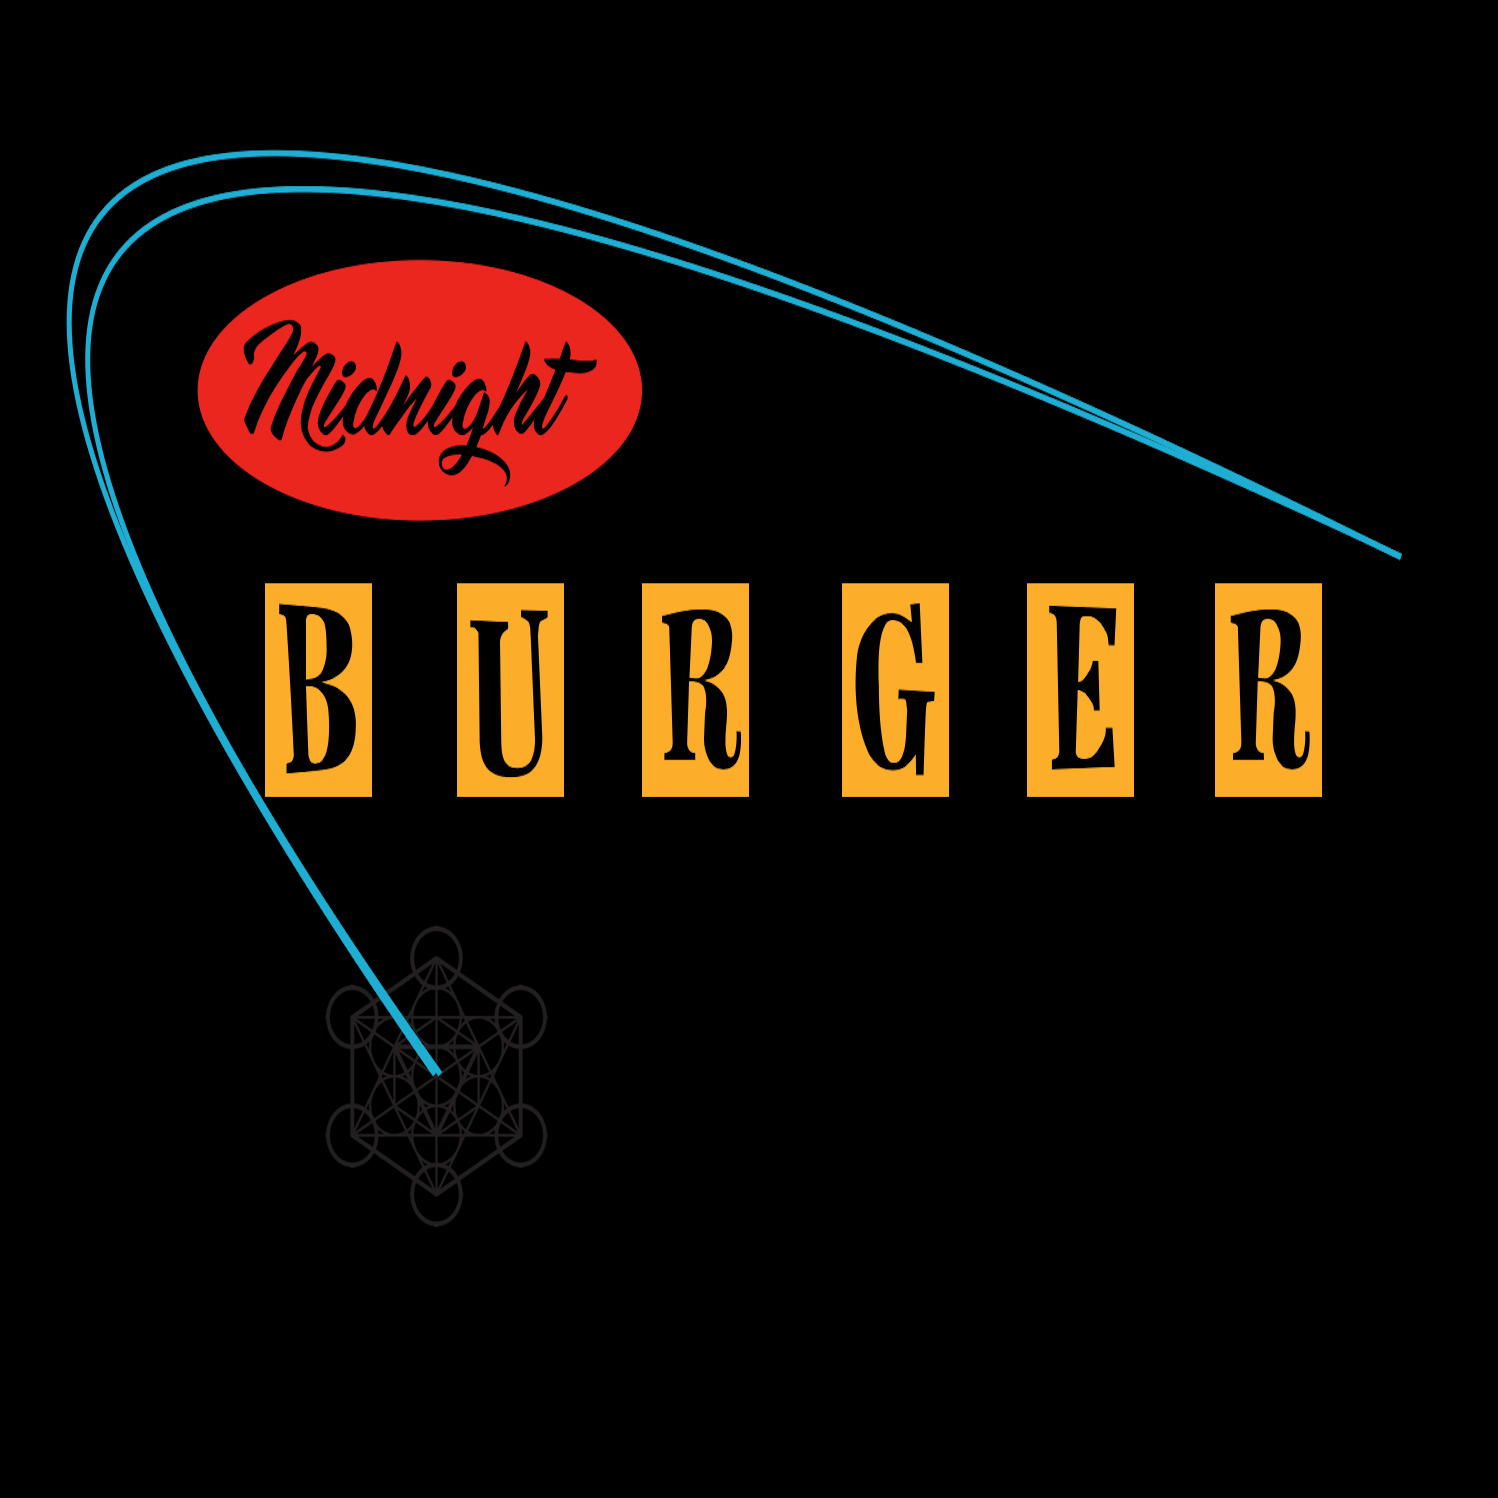 Midnight Burger Ep1 by Joe Fisher